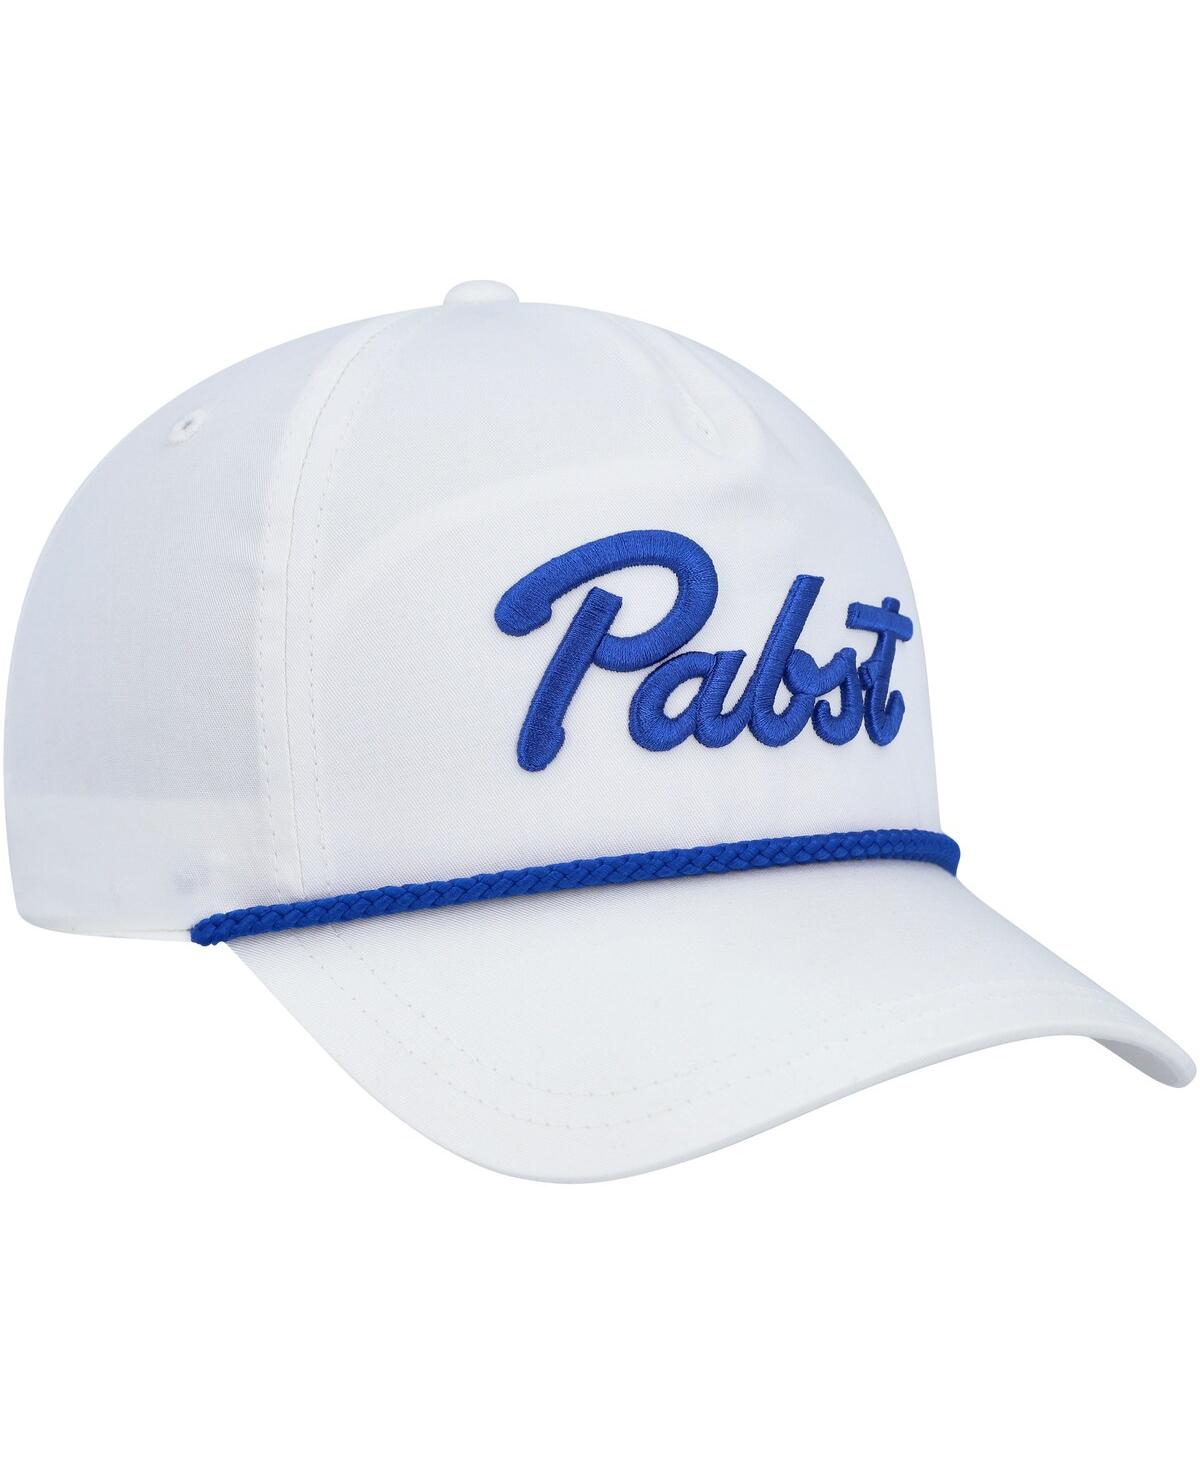 Shop American Needle Men's  White Pabst Blue Ribbon Rope Snapback Hat